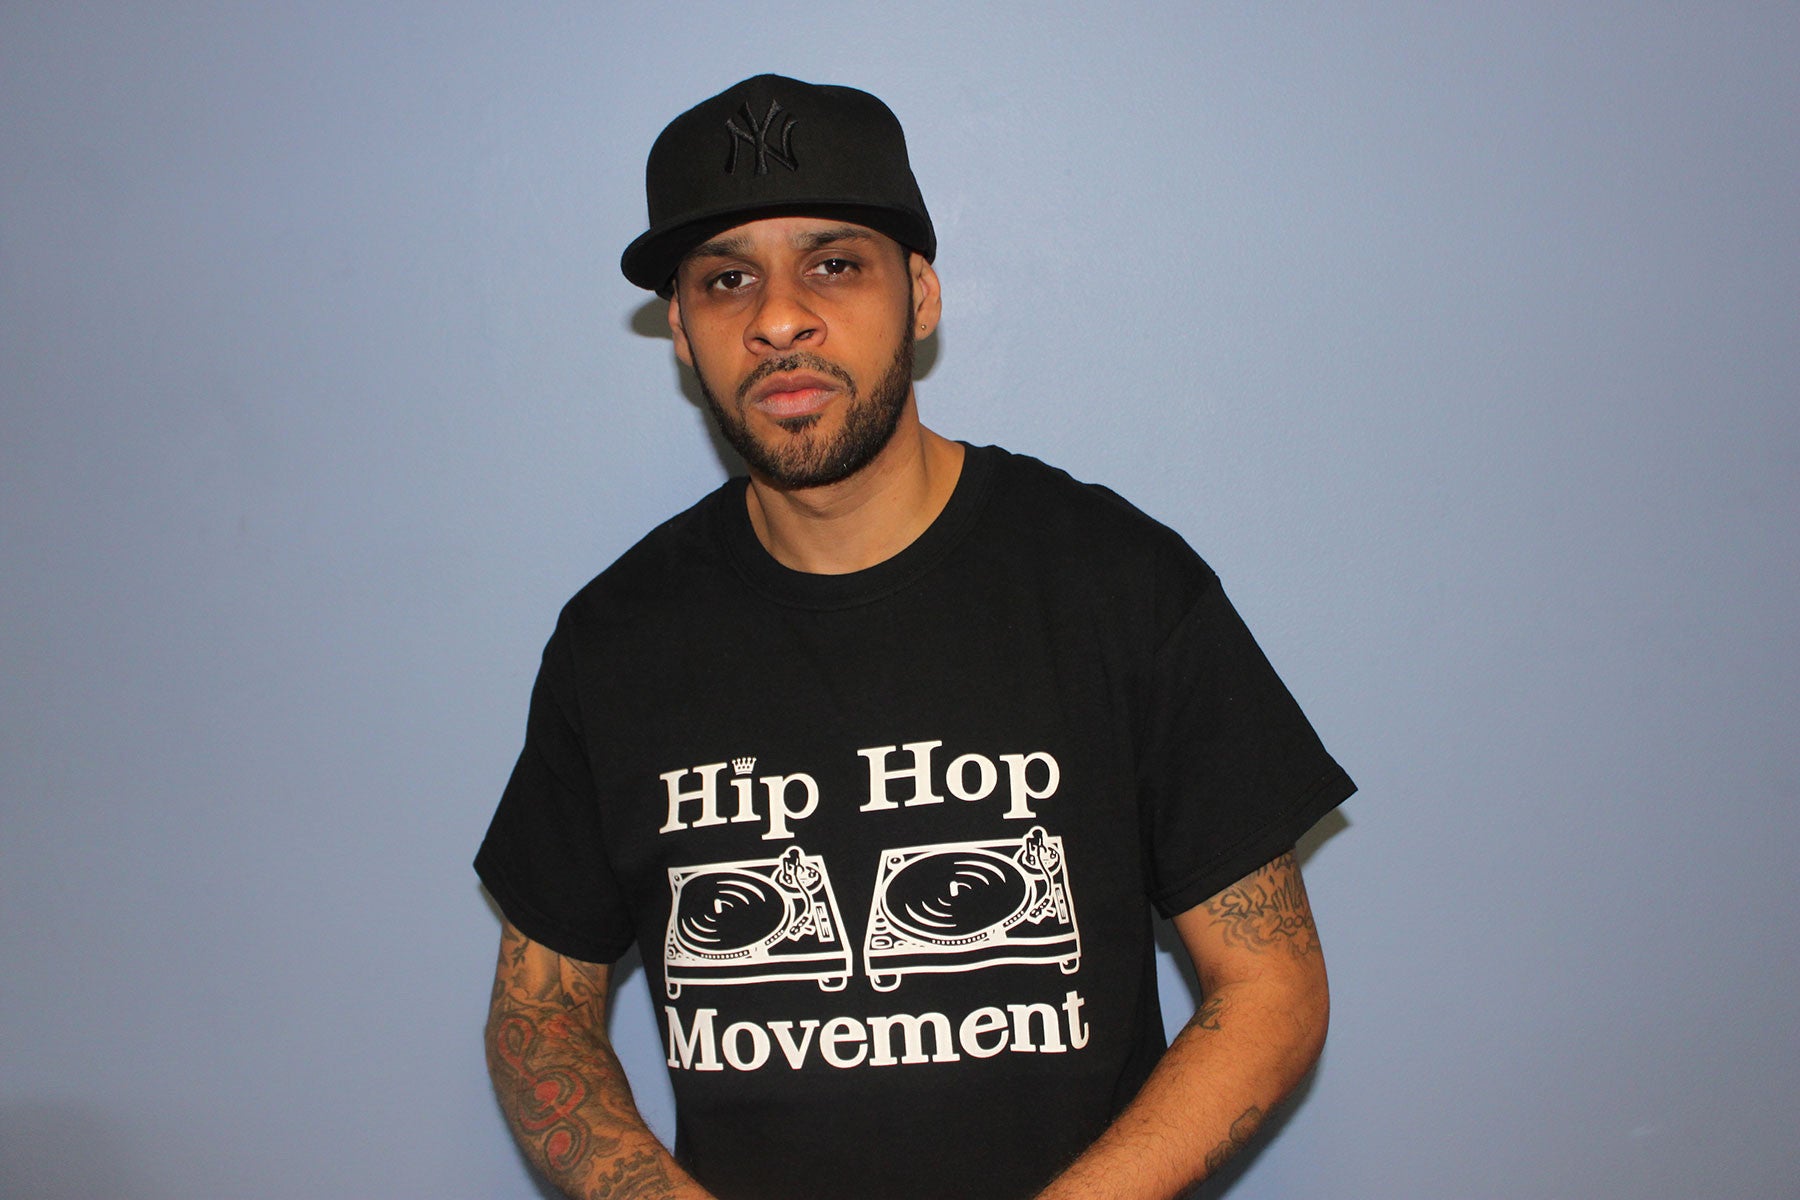 Hip Hop Movement Teeshirt (Black)